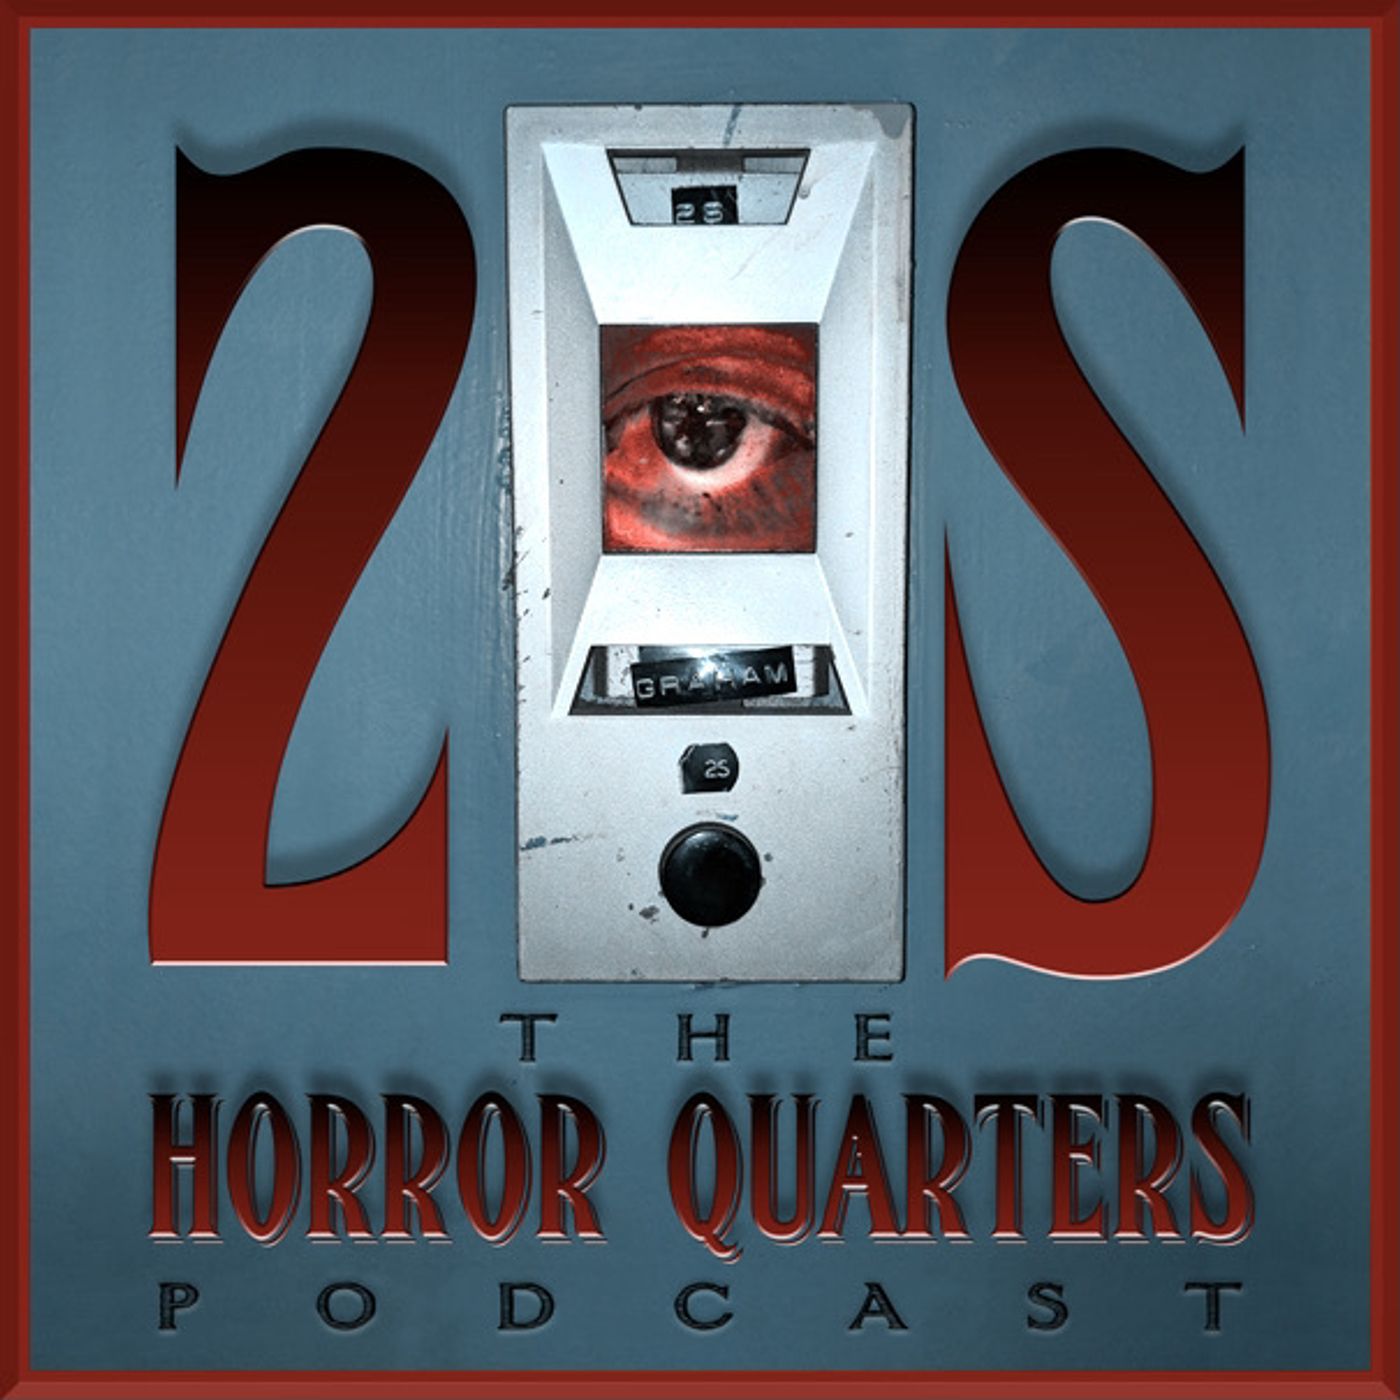 2S: The HORROR QUARTERS Podcast